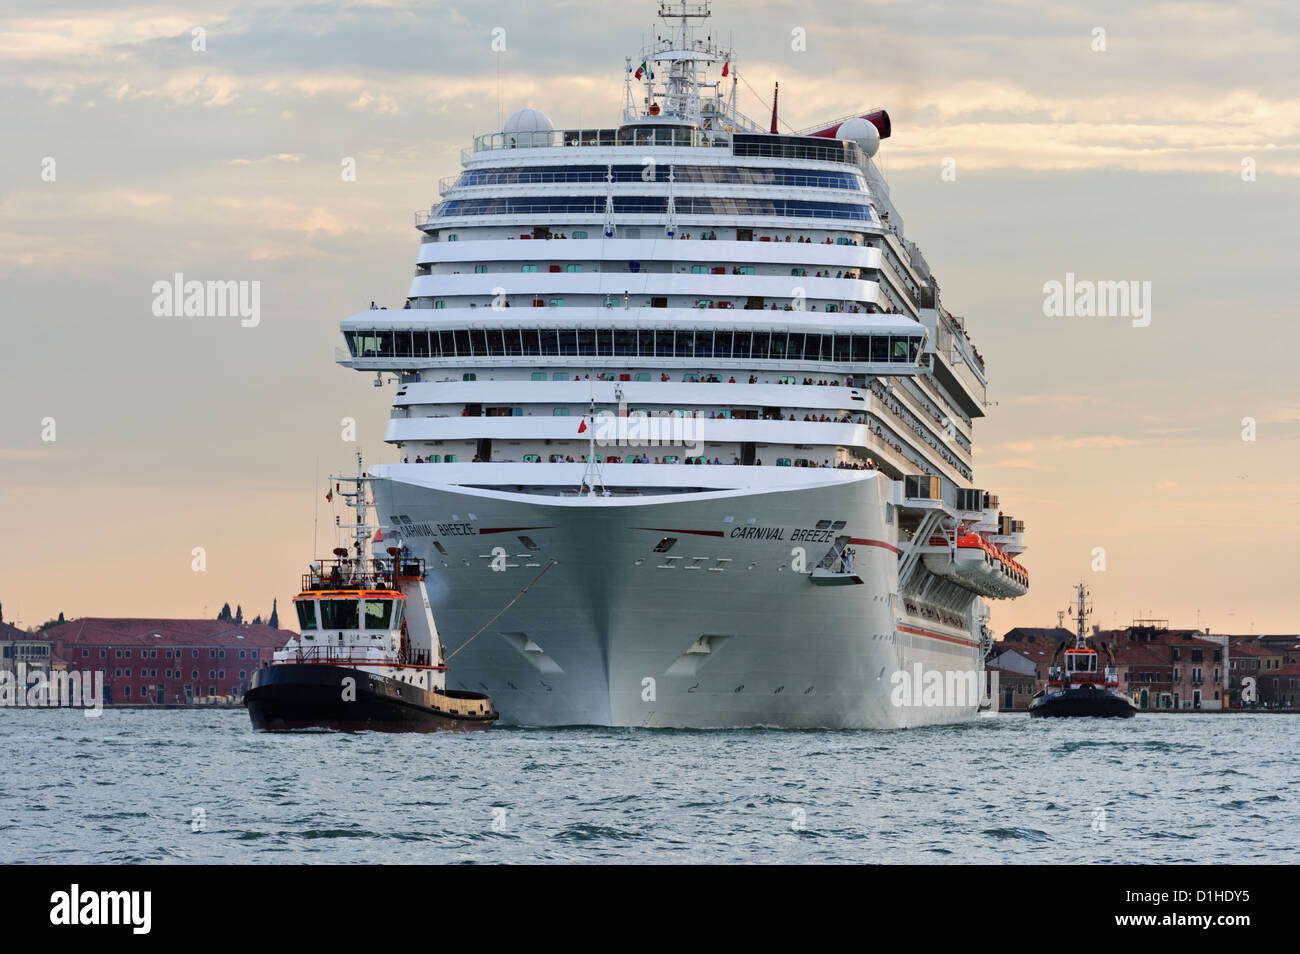 Cruise ship sailing along the Grand Canal, Venice, Italy. Stock Photo